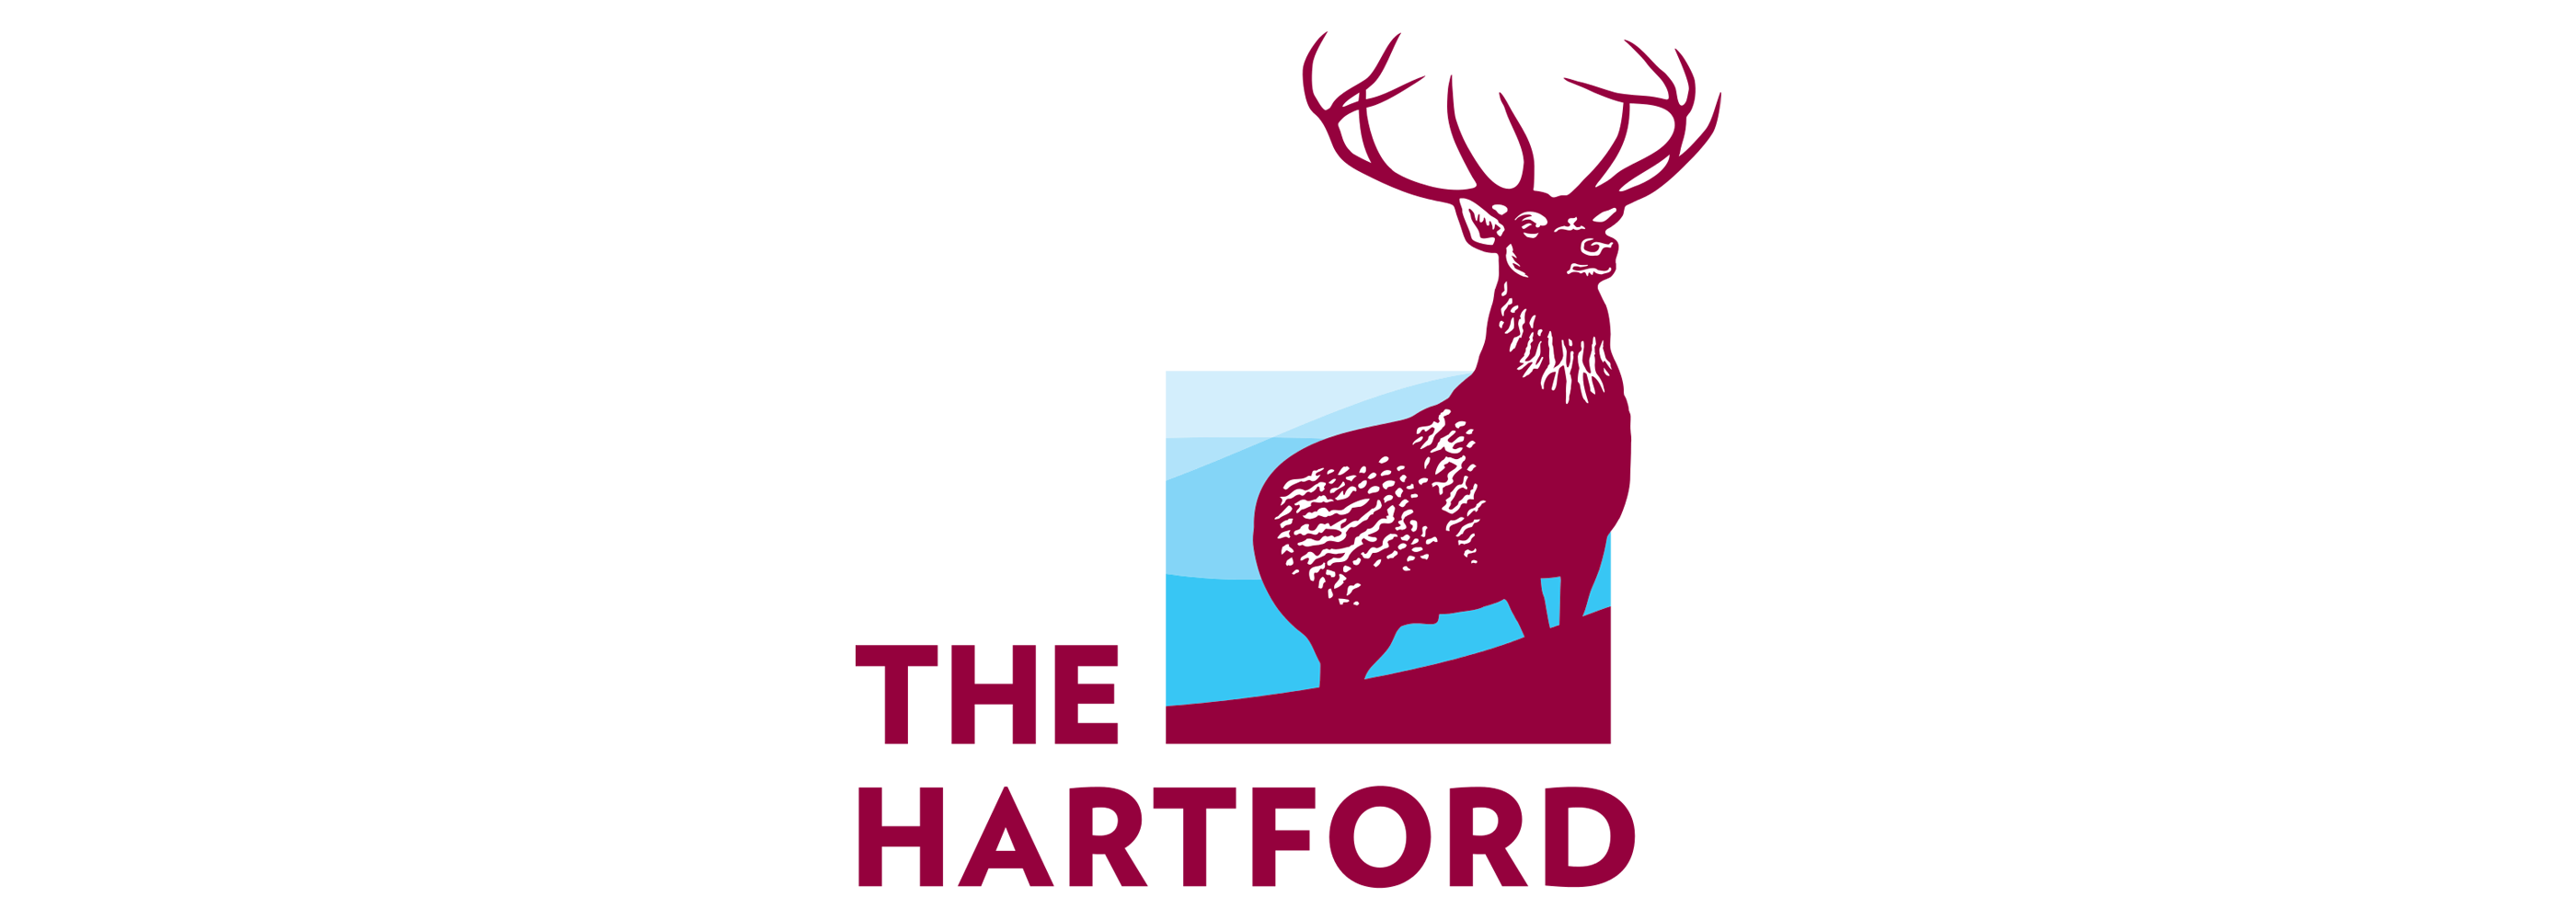 The Hartford Insurance logo